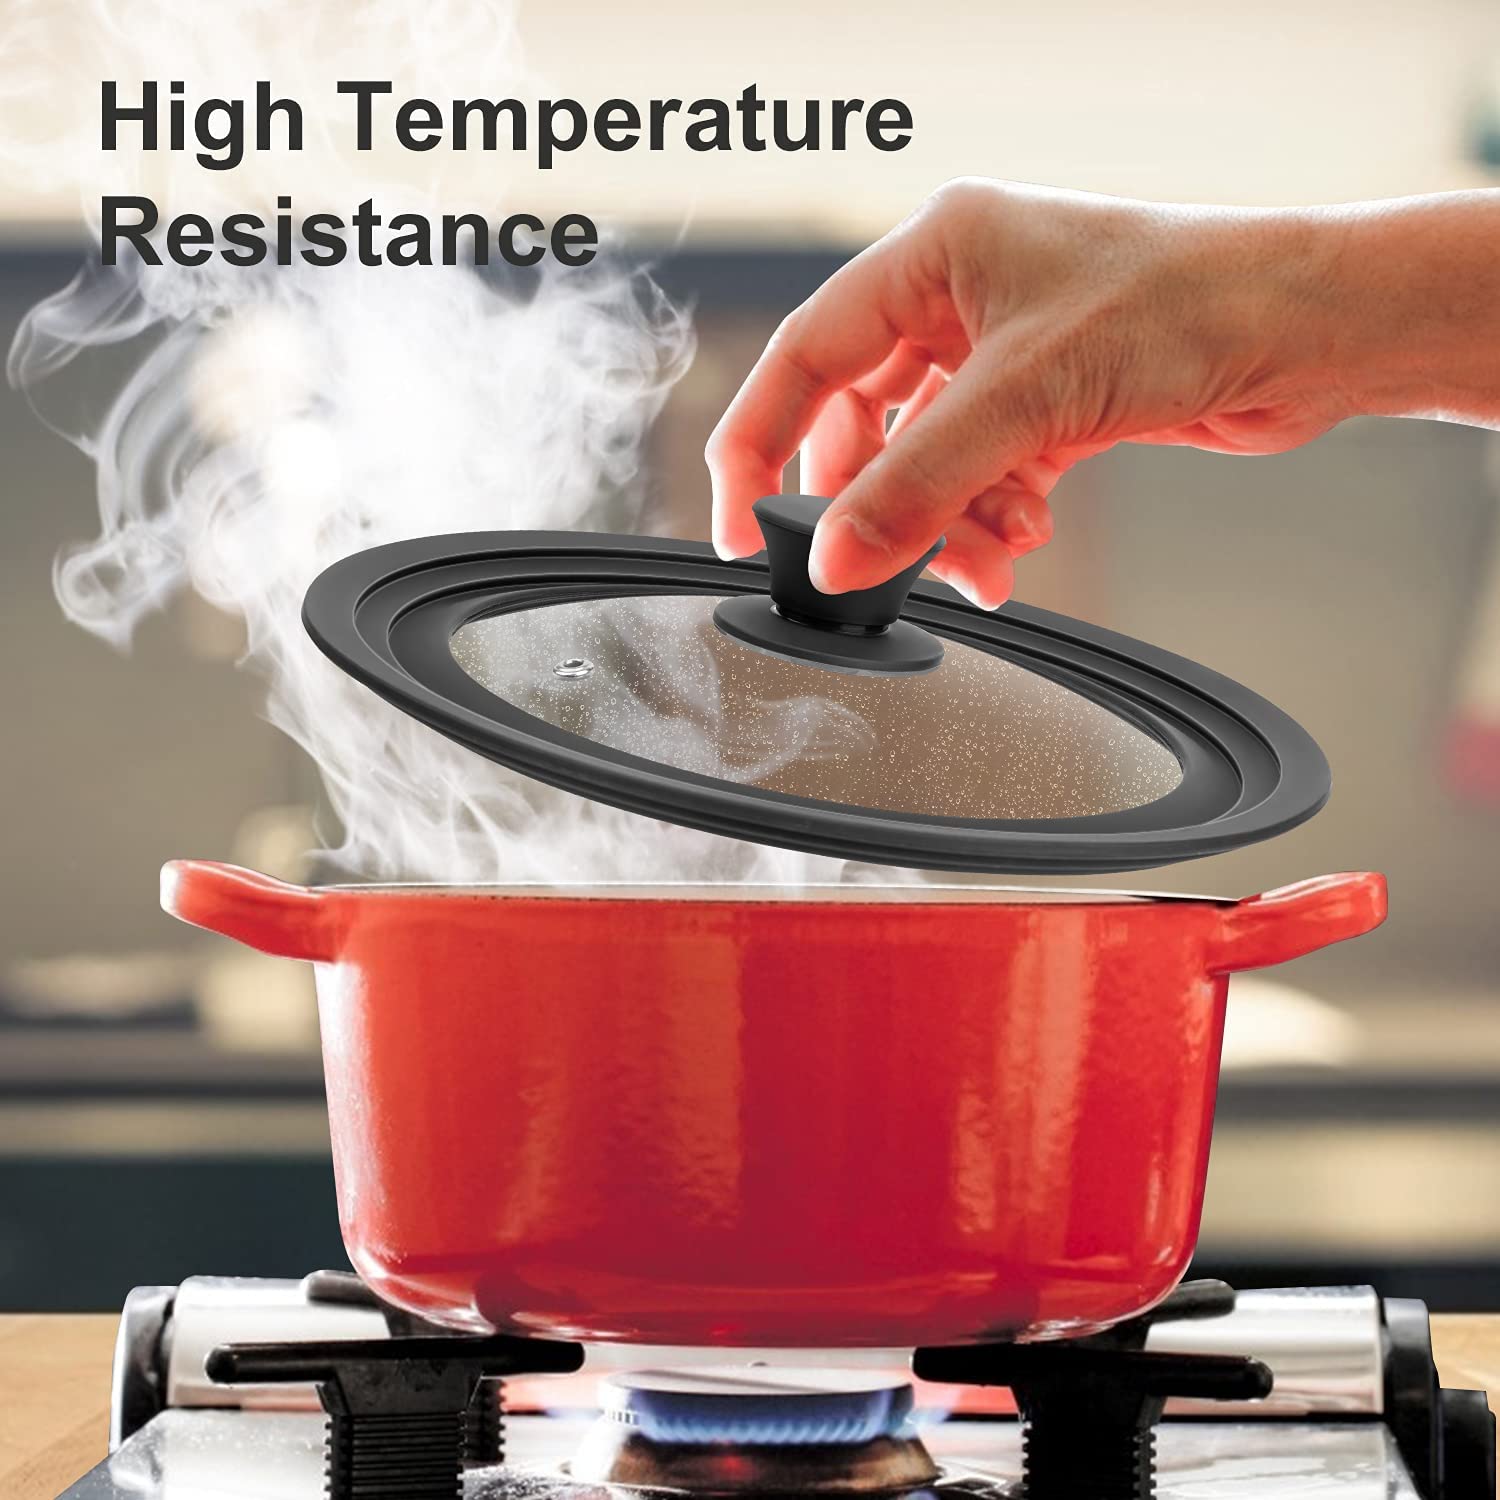 Heat-resistant silicone handle